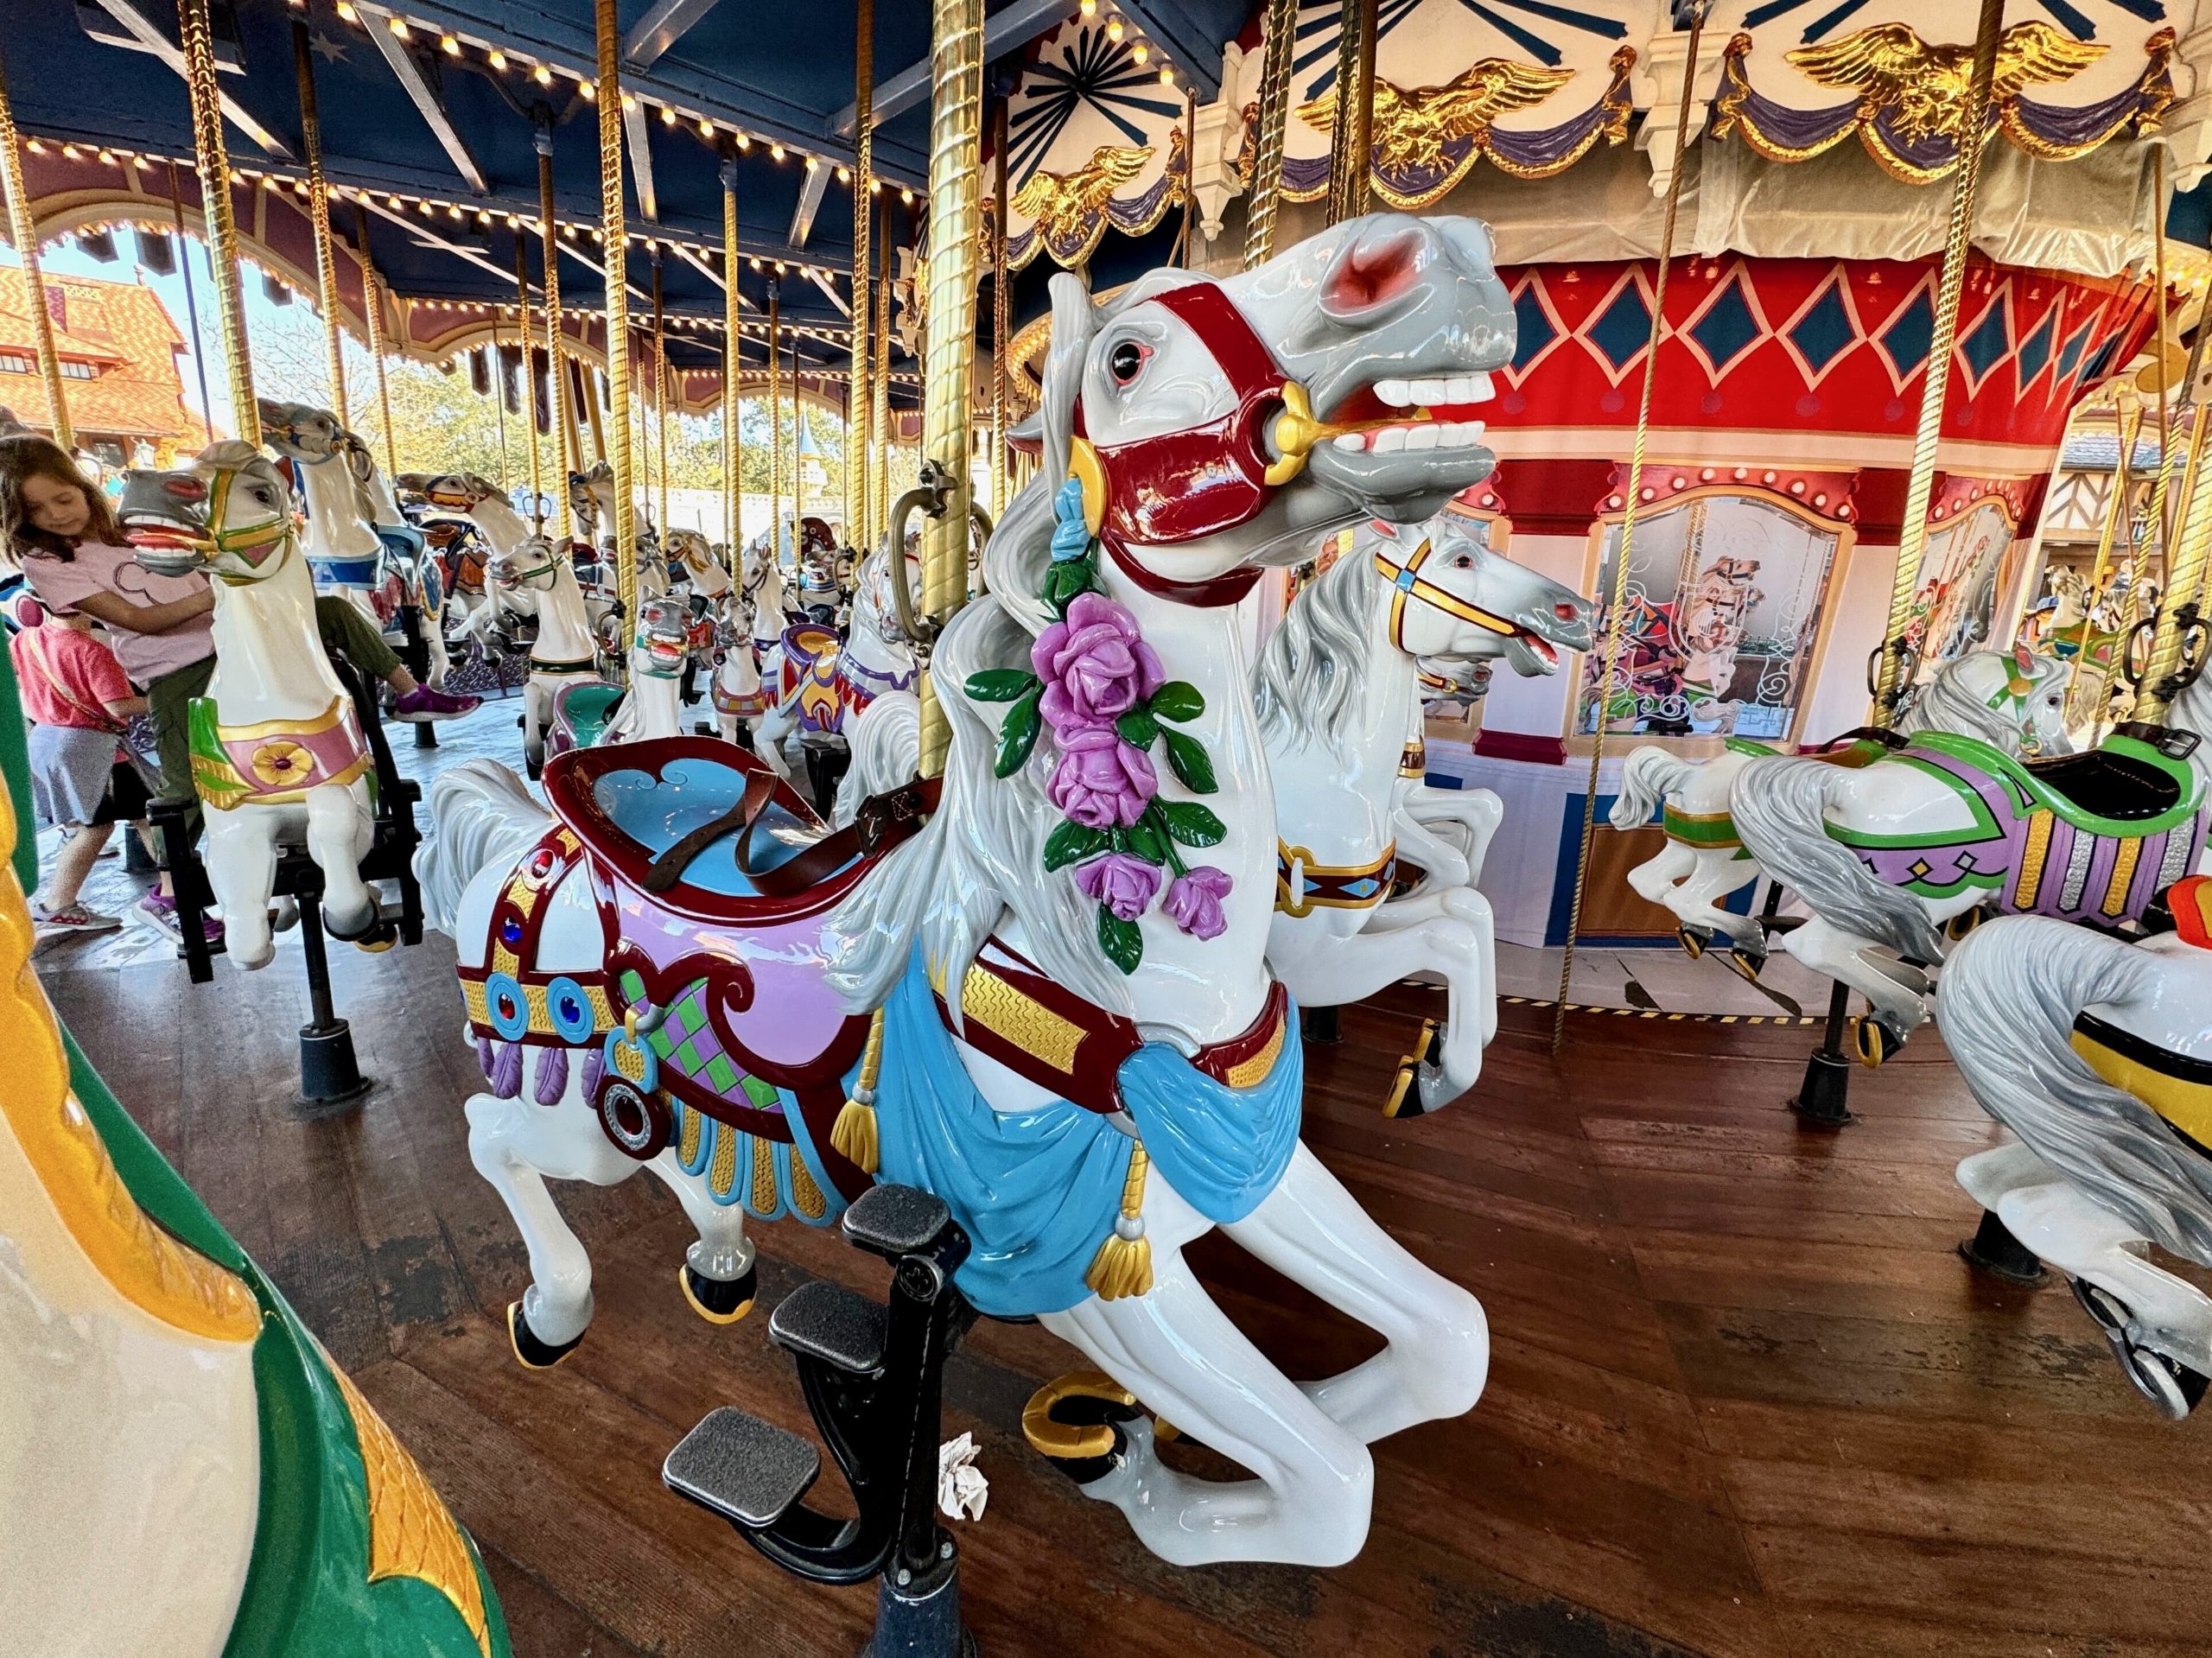 Cinderella's Horse Prince Charming's Regal Carousel Magic Kingdom